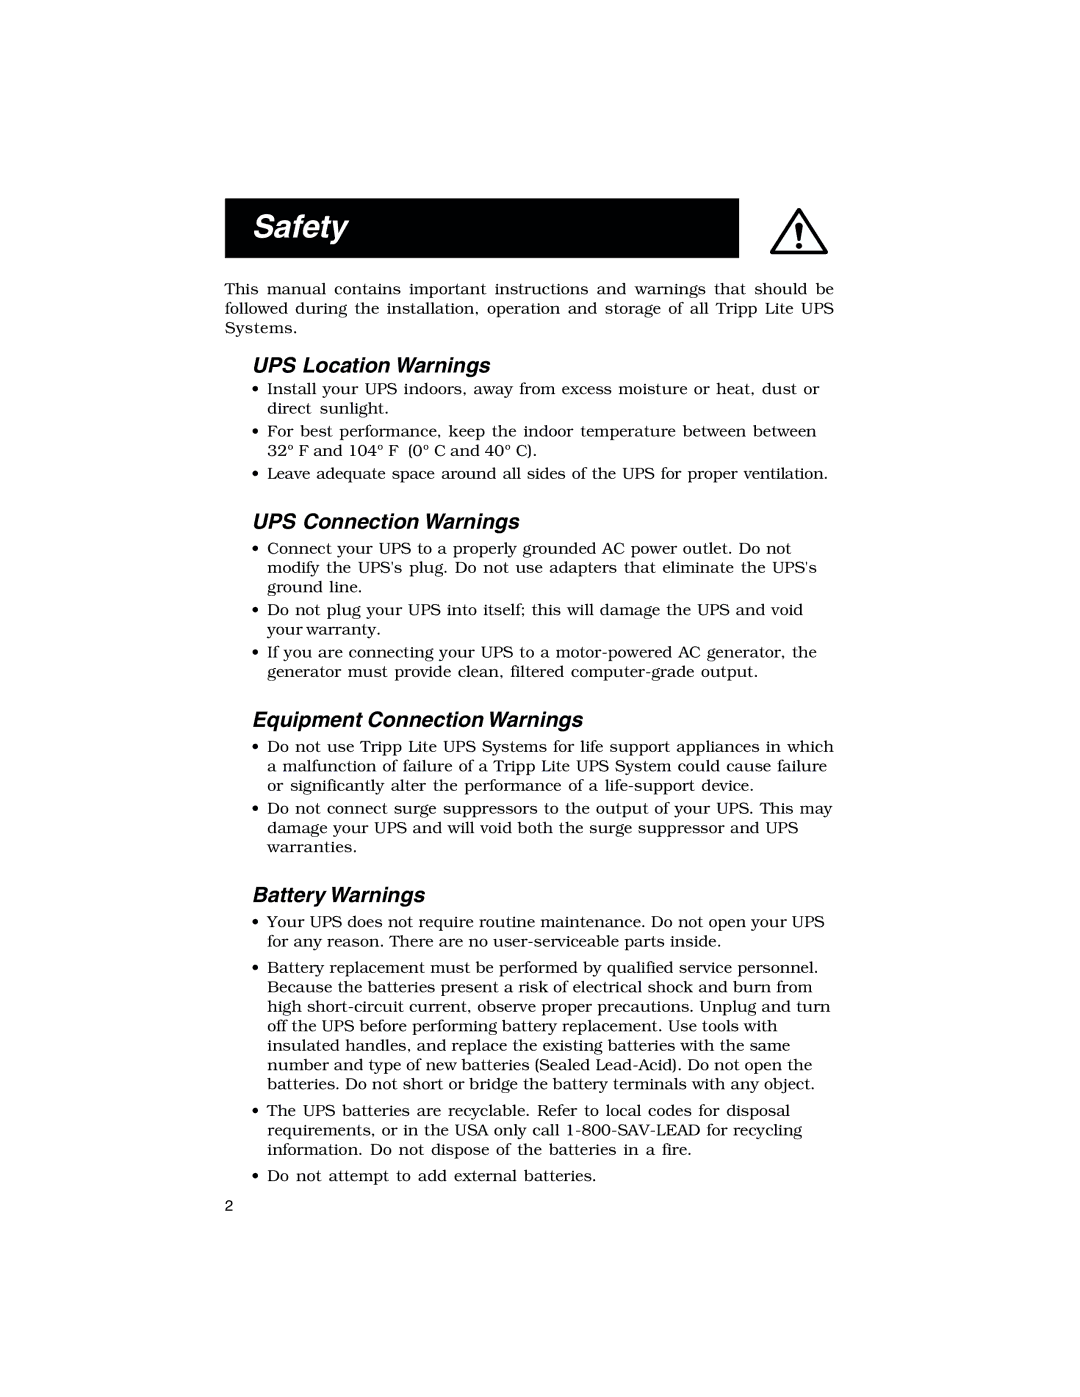 Tripp Lite 675 Safety, UPS Location Warnings, UPS Connection Warnings, Equipment Connection Warnings, Battery Warnings 